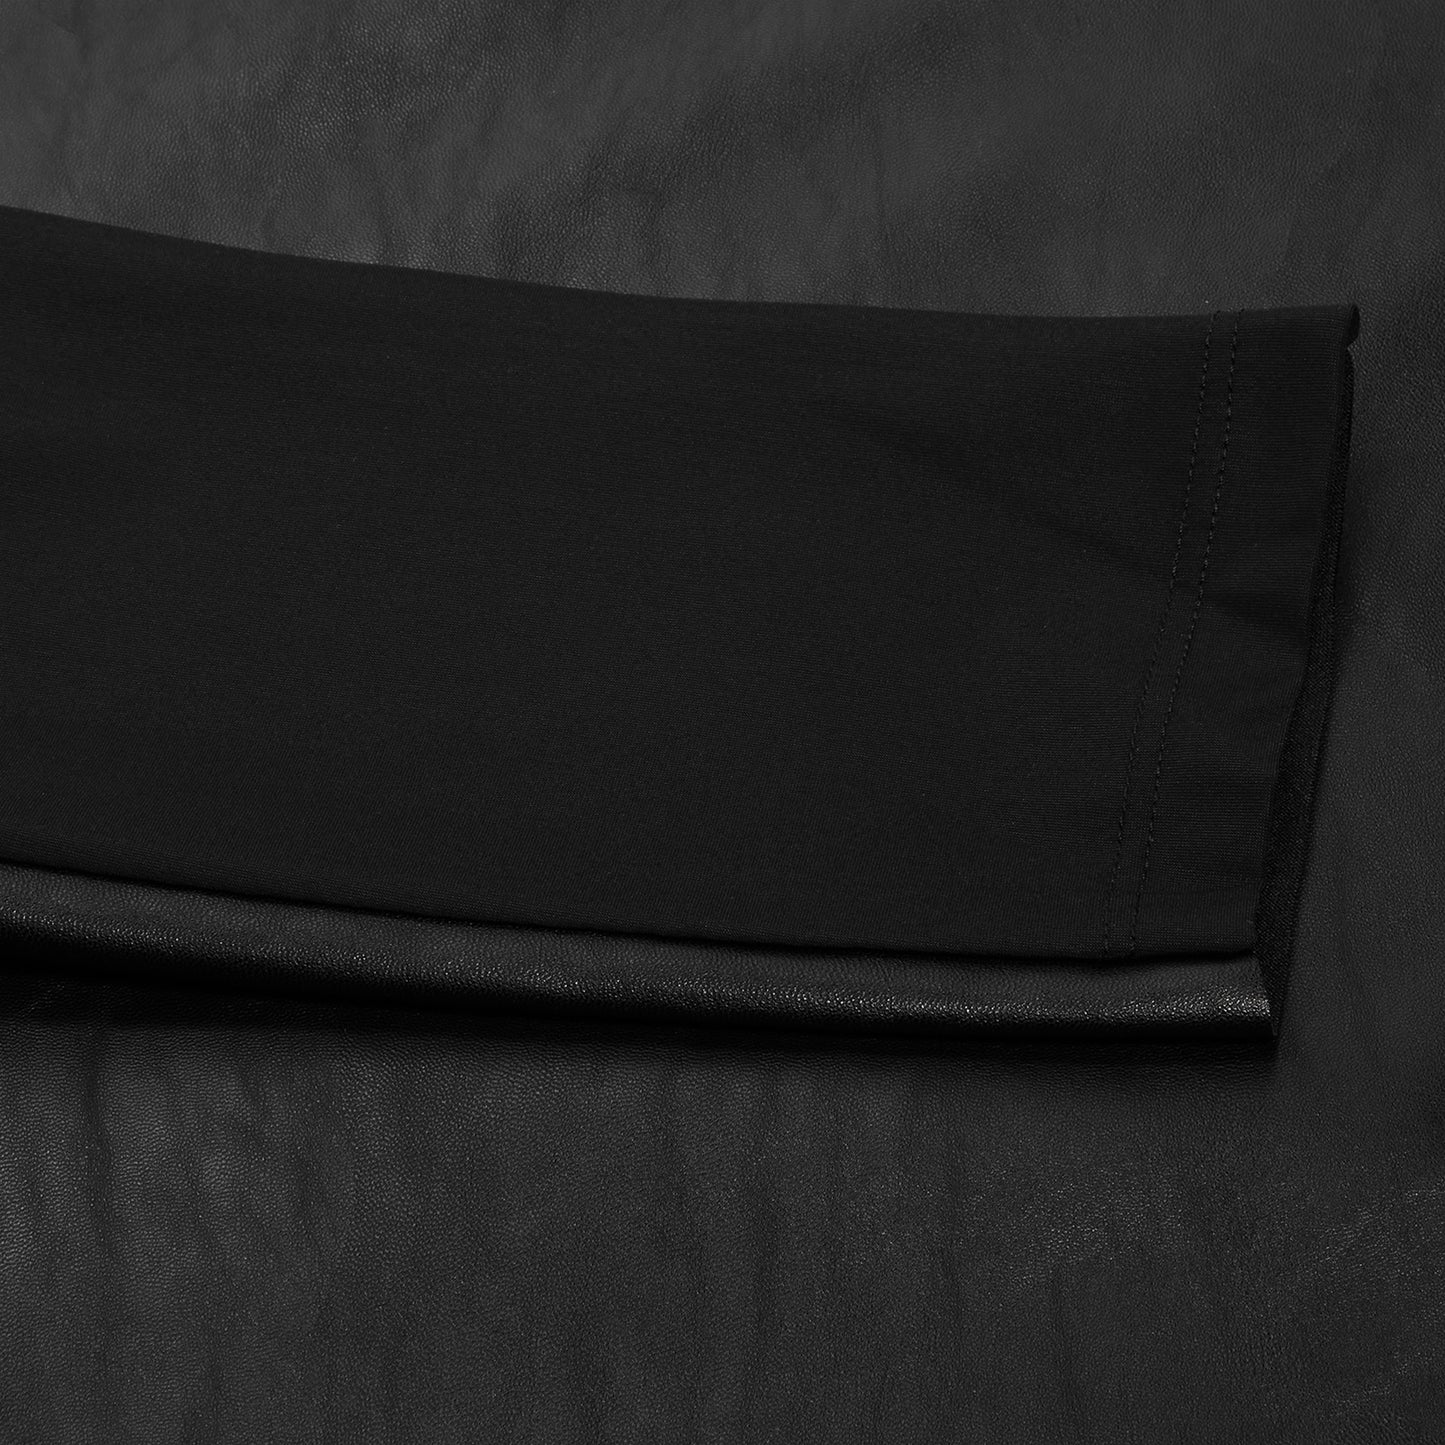 MM6 Maison Margiela Leather Effect Long-Sleeved Top (Black)